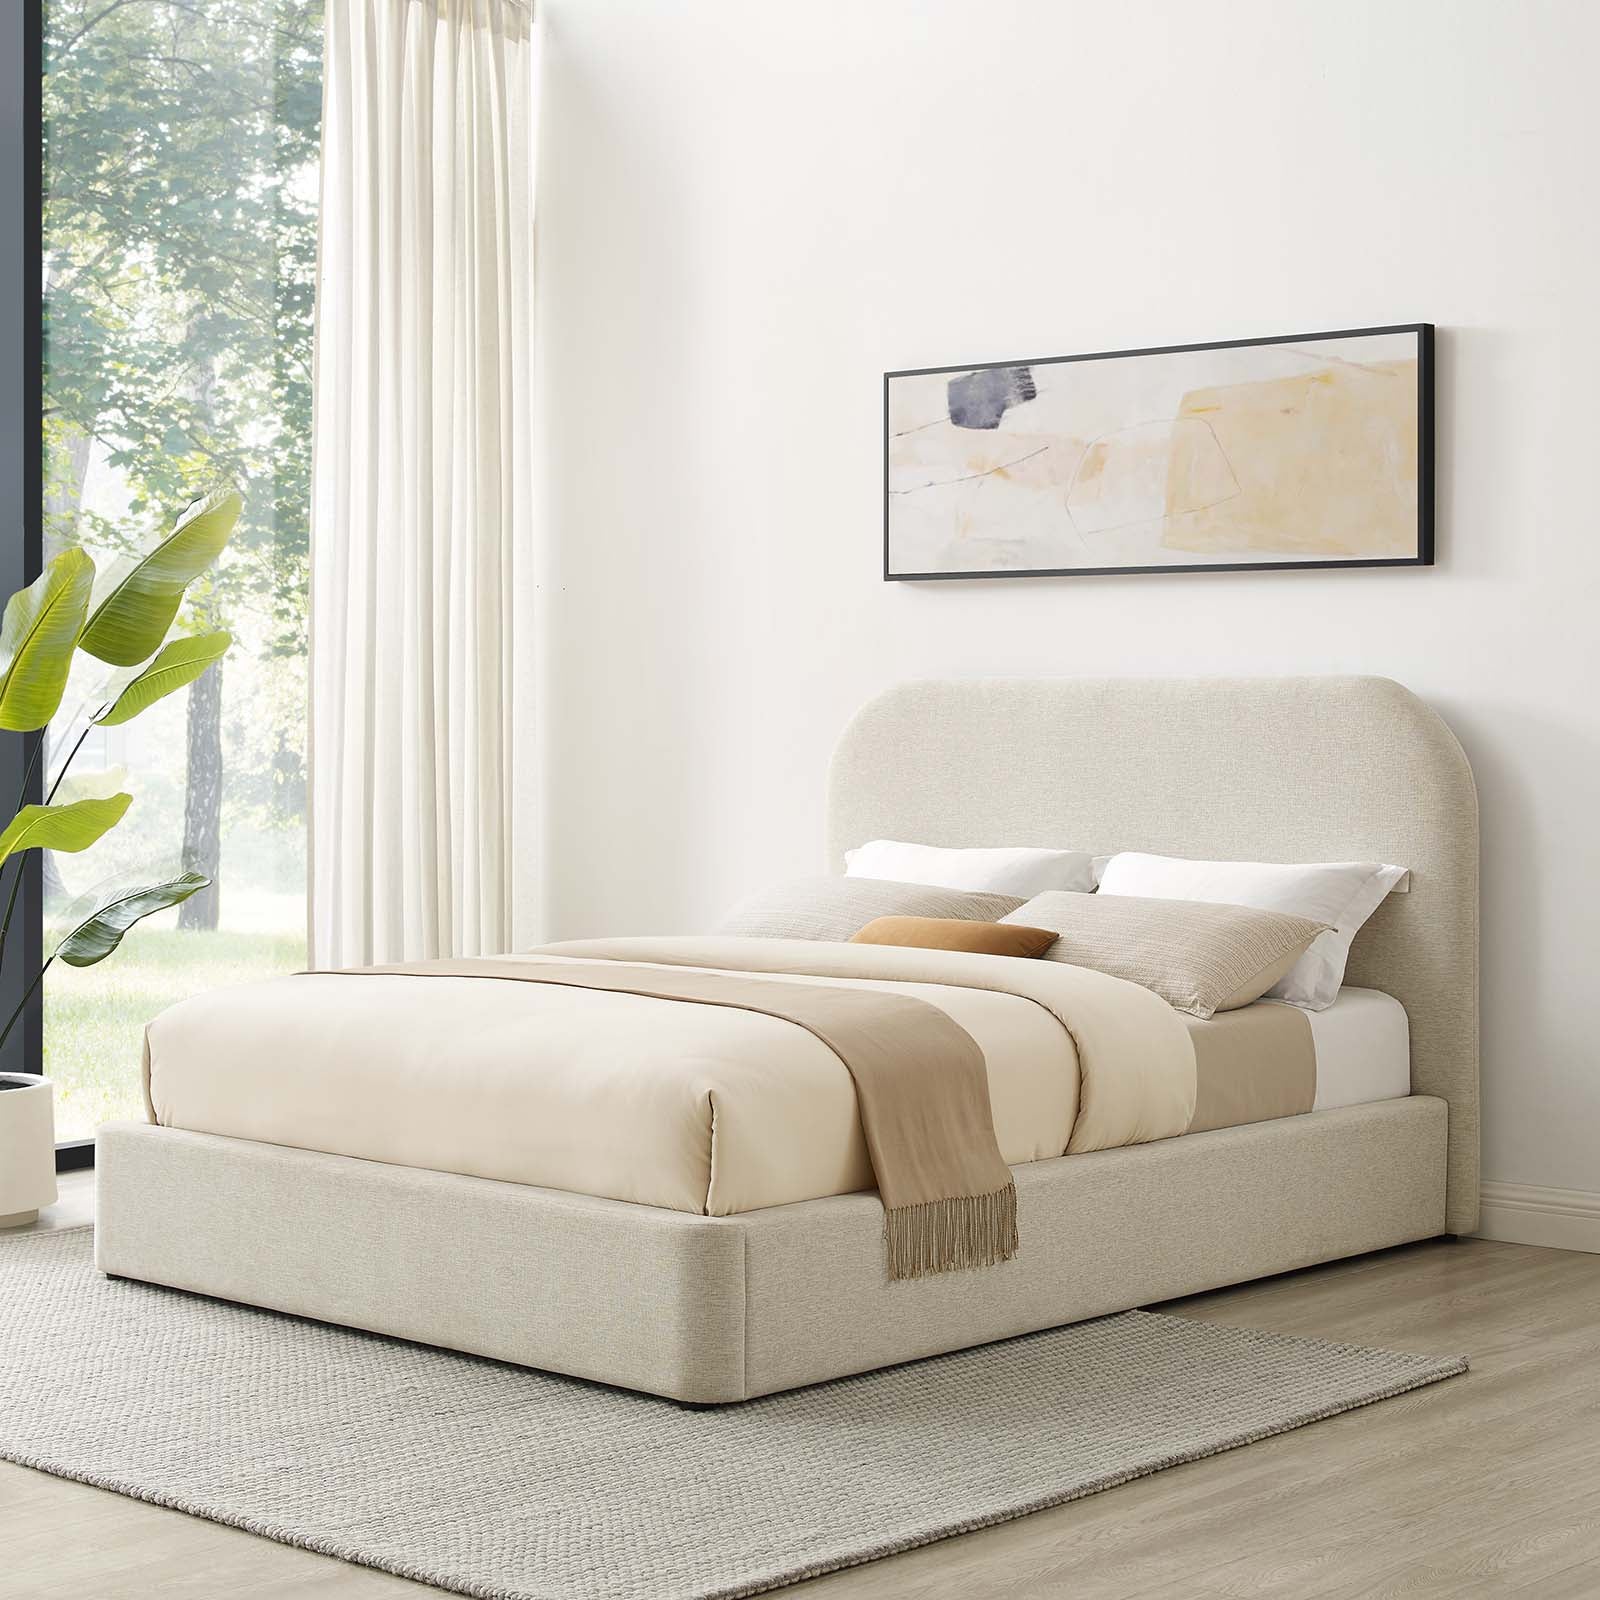 Keynote Upholstered Fabric Curved Platform Bed - East Shore Modern Home Furnishings